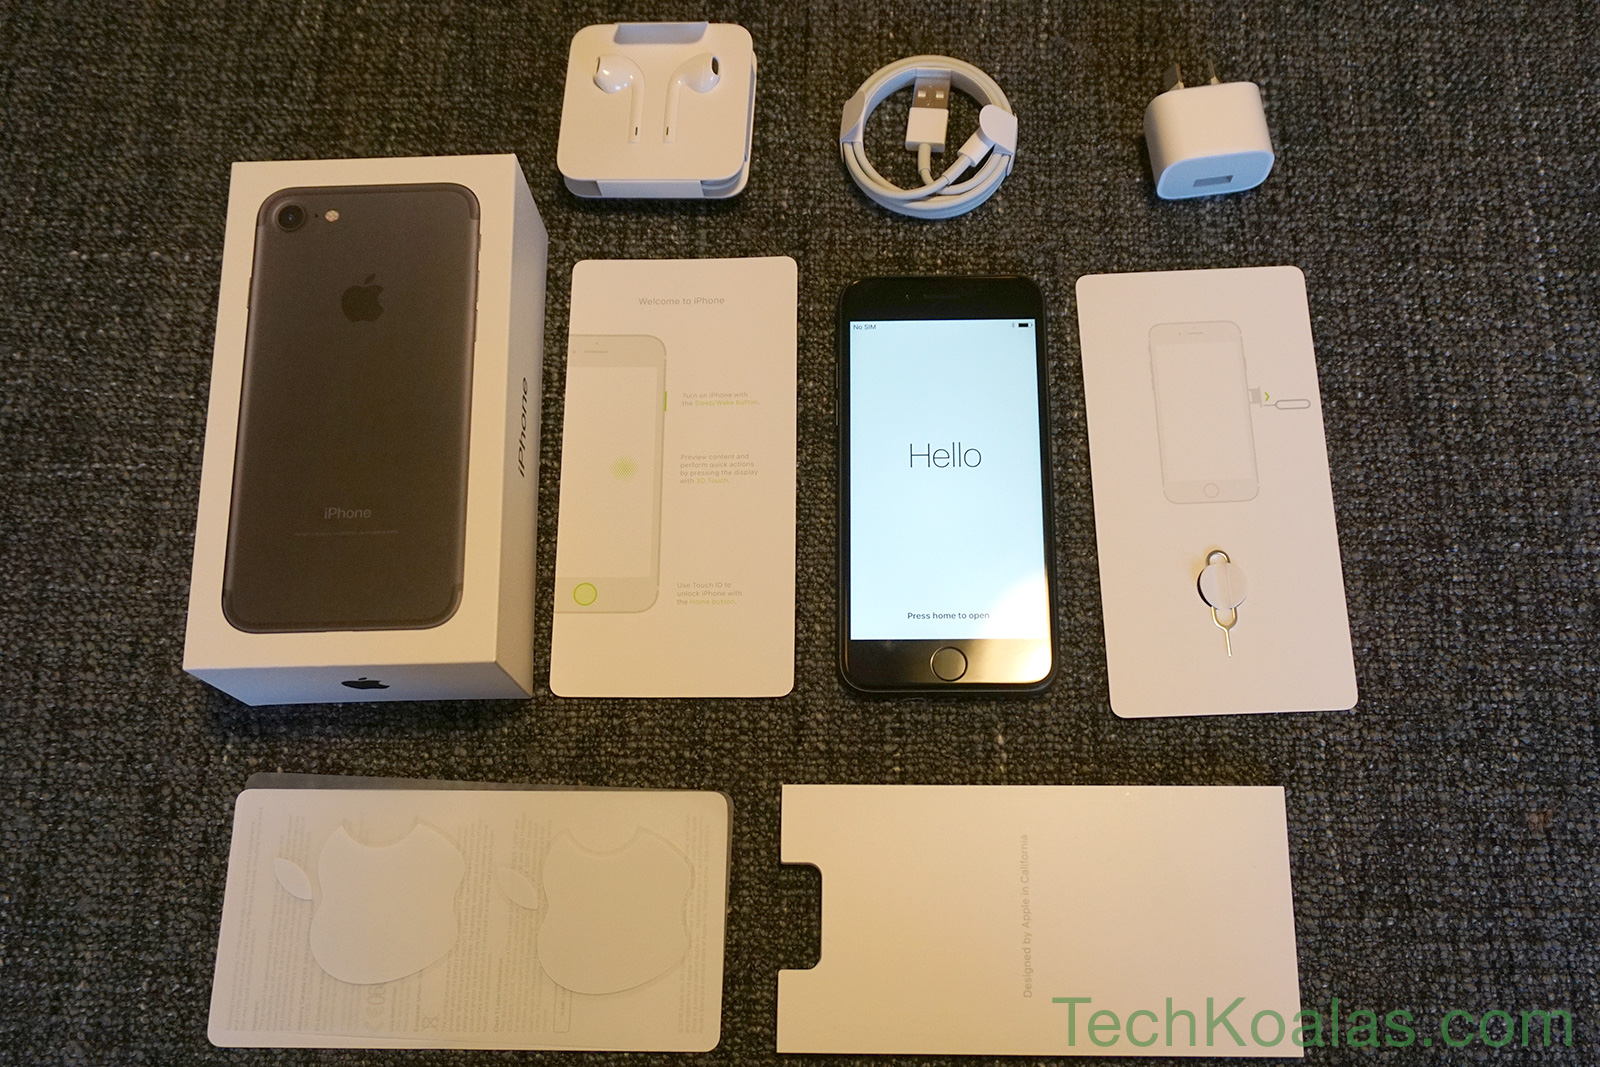 Apple iPhone 7 - What's in The Box - TechKoala.com